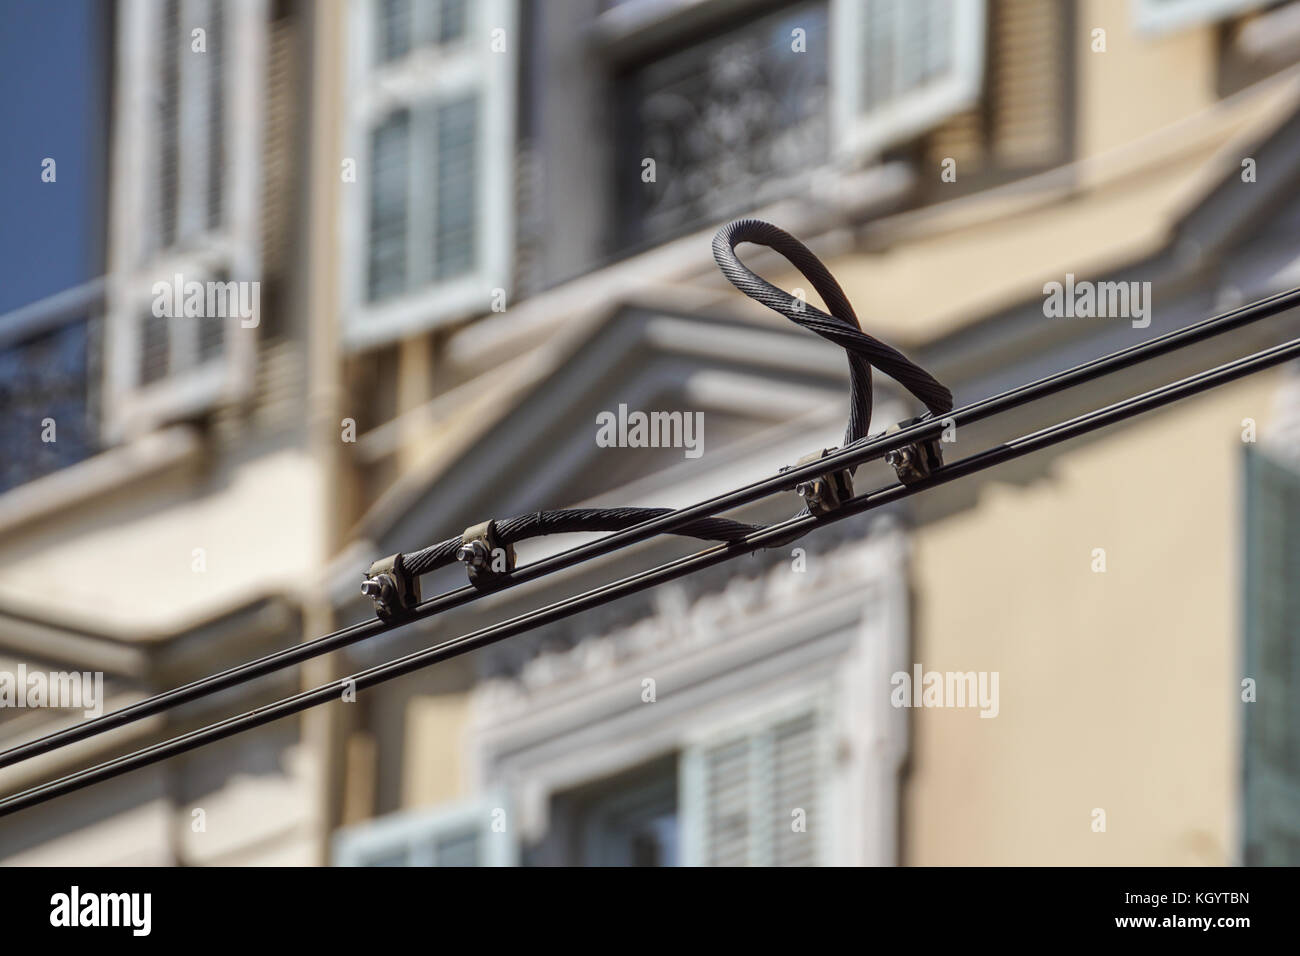 Black tram wires detail over urban facade Stock Photo